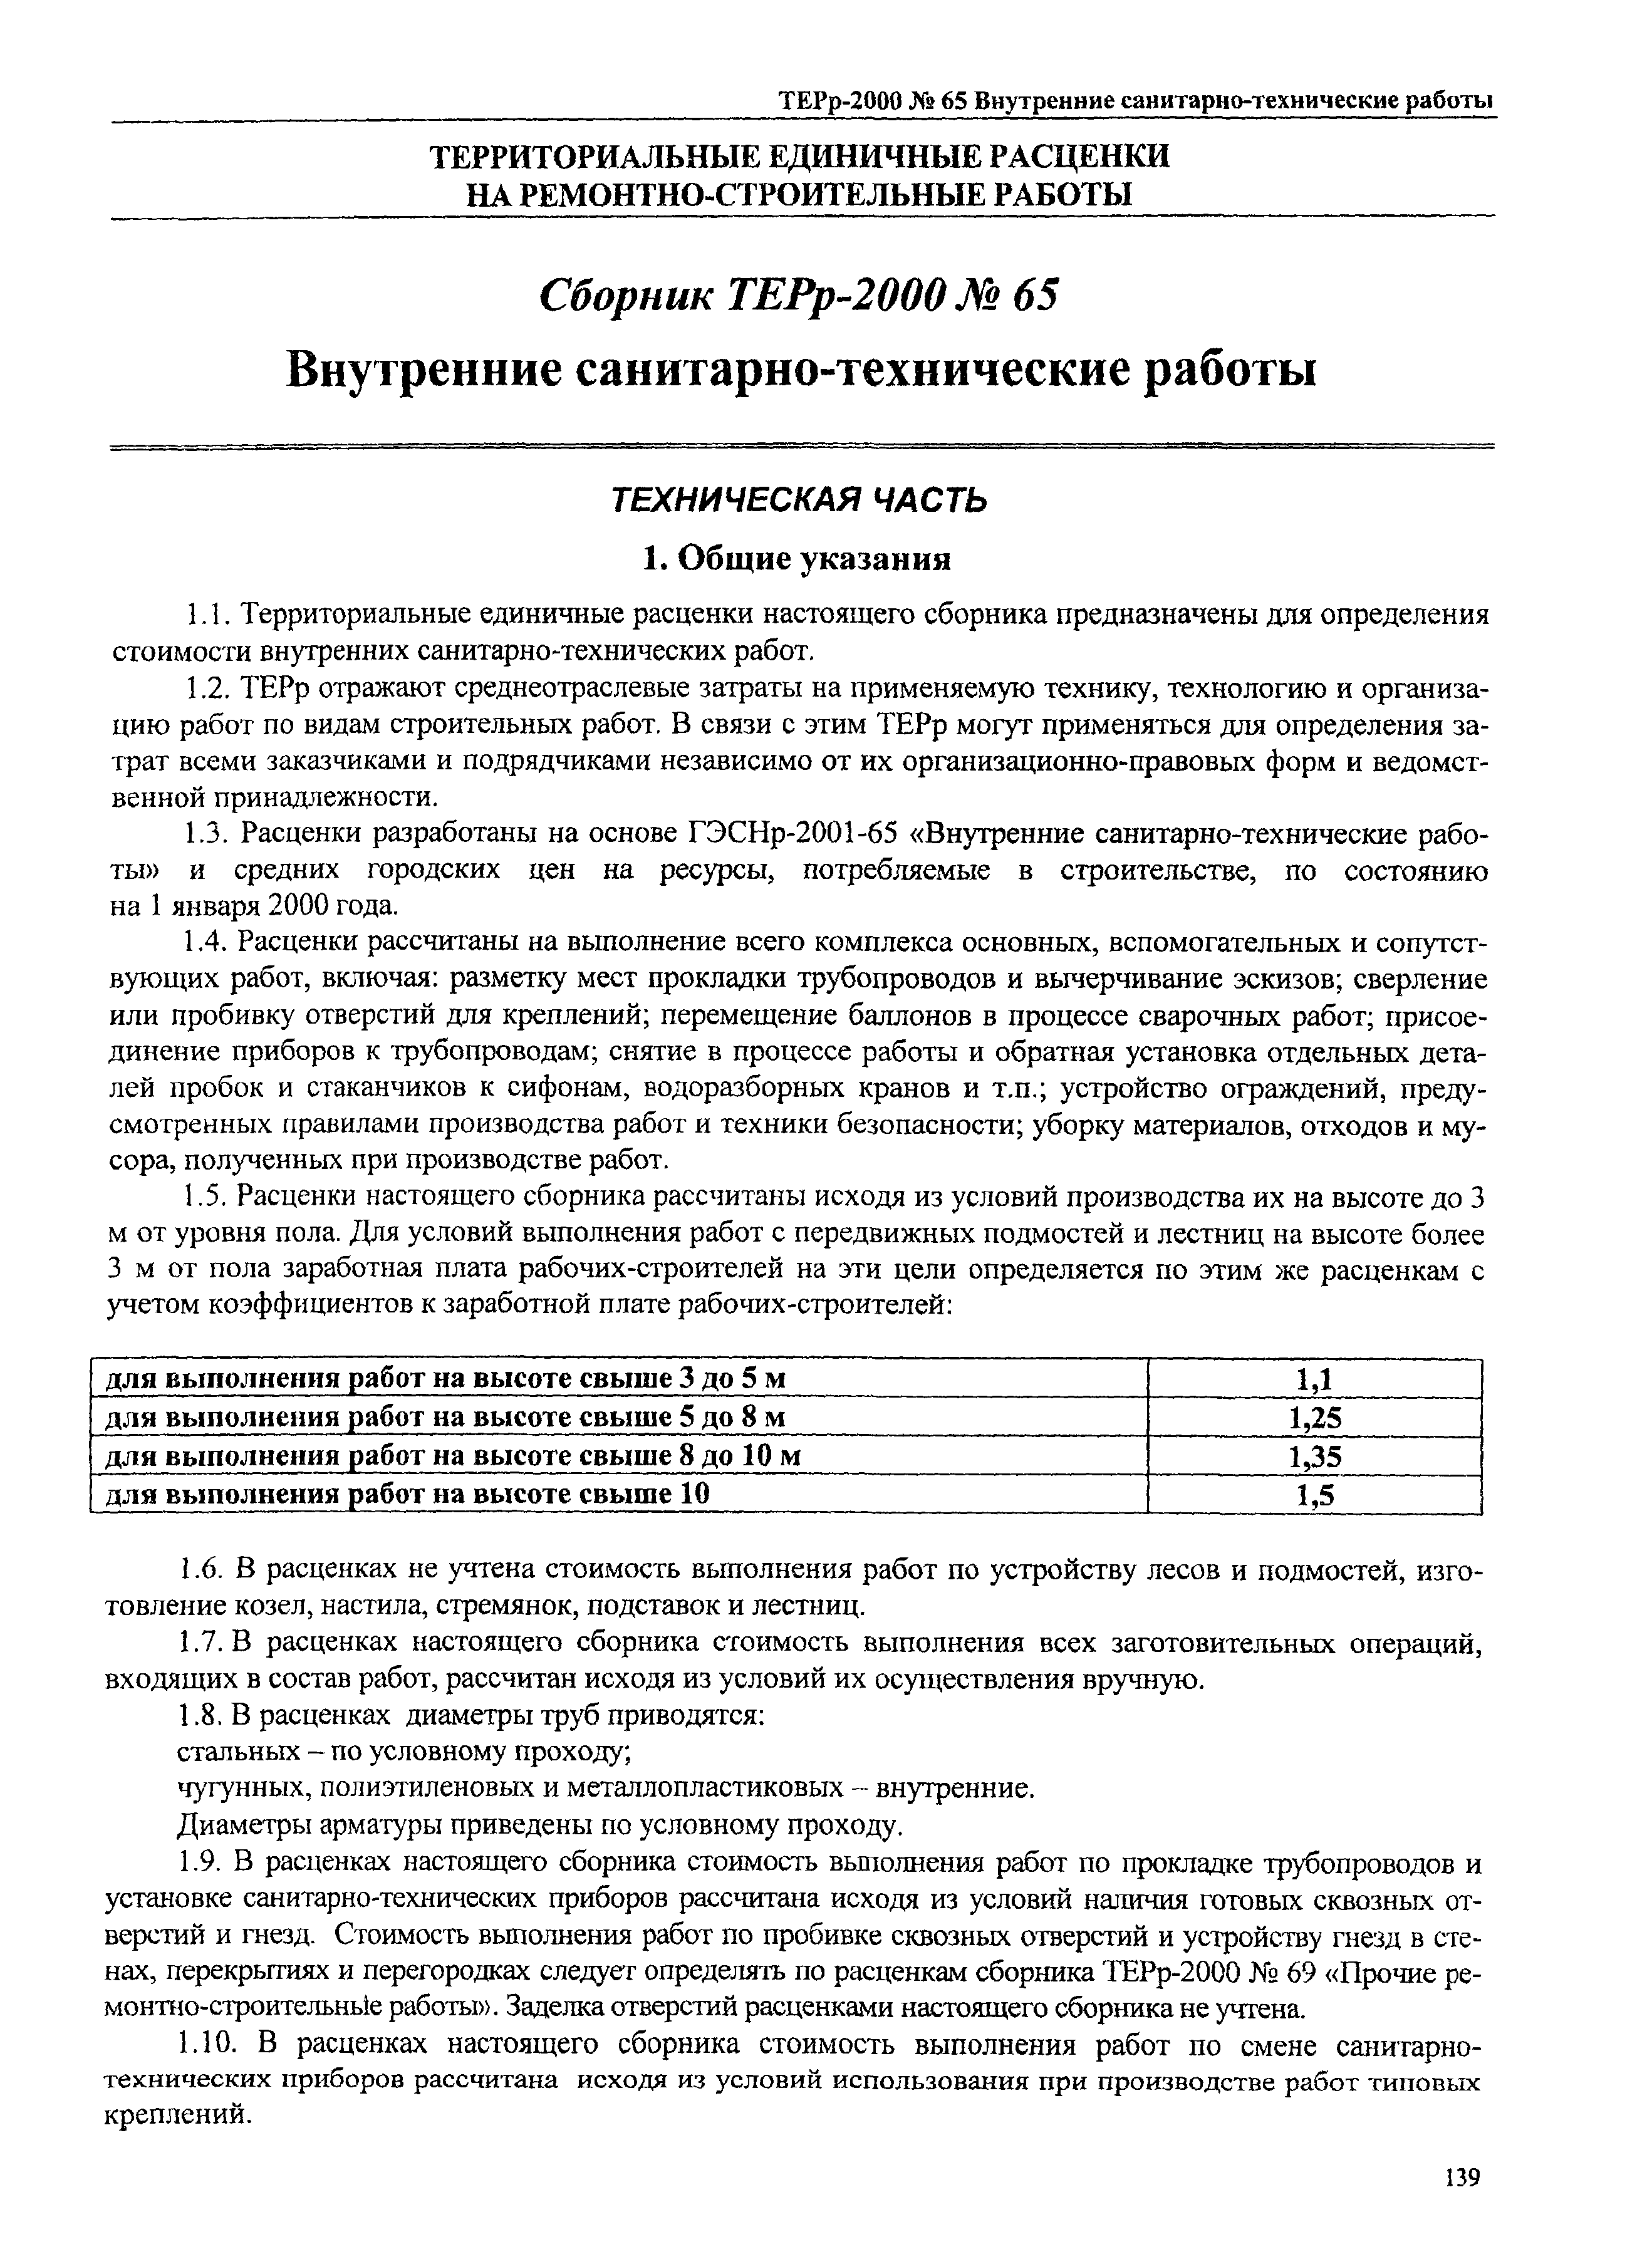 ТЕРр Омской области 2000-65